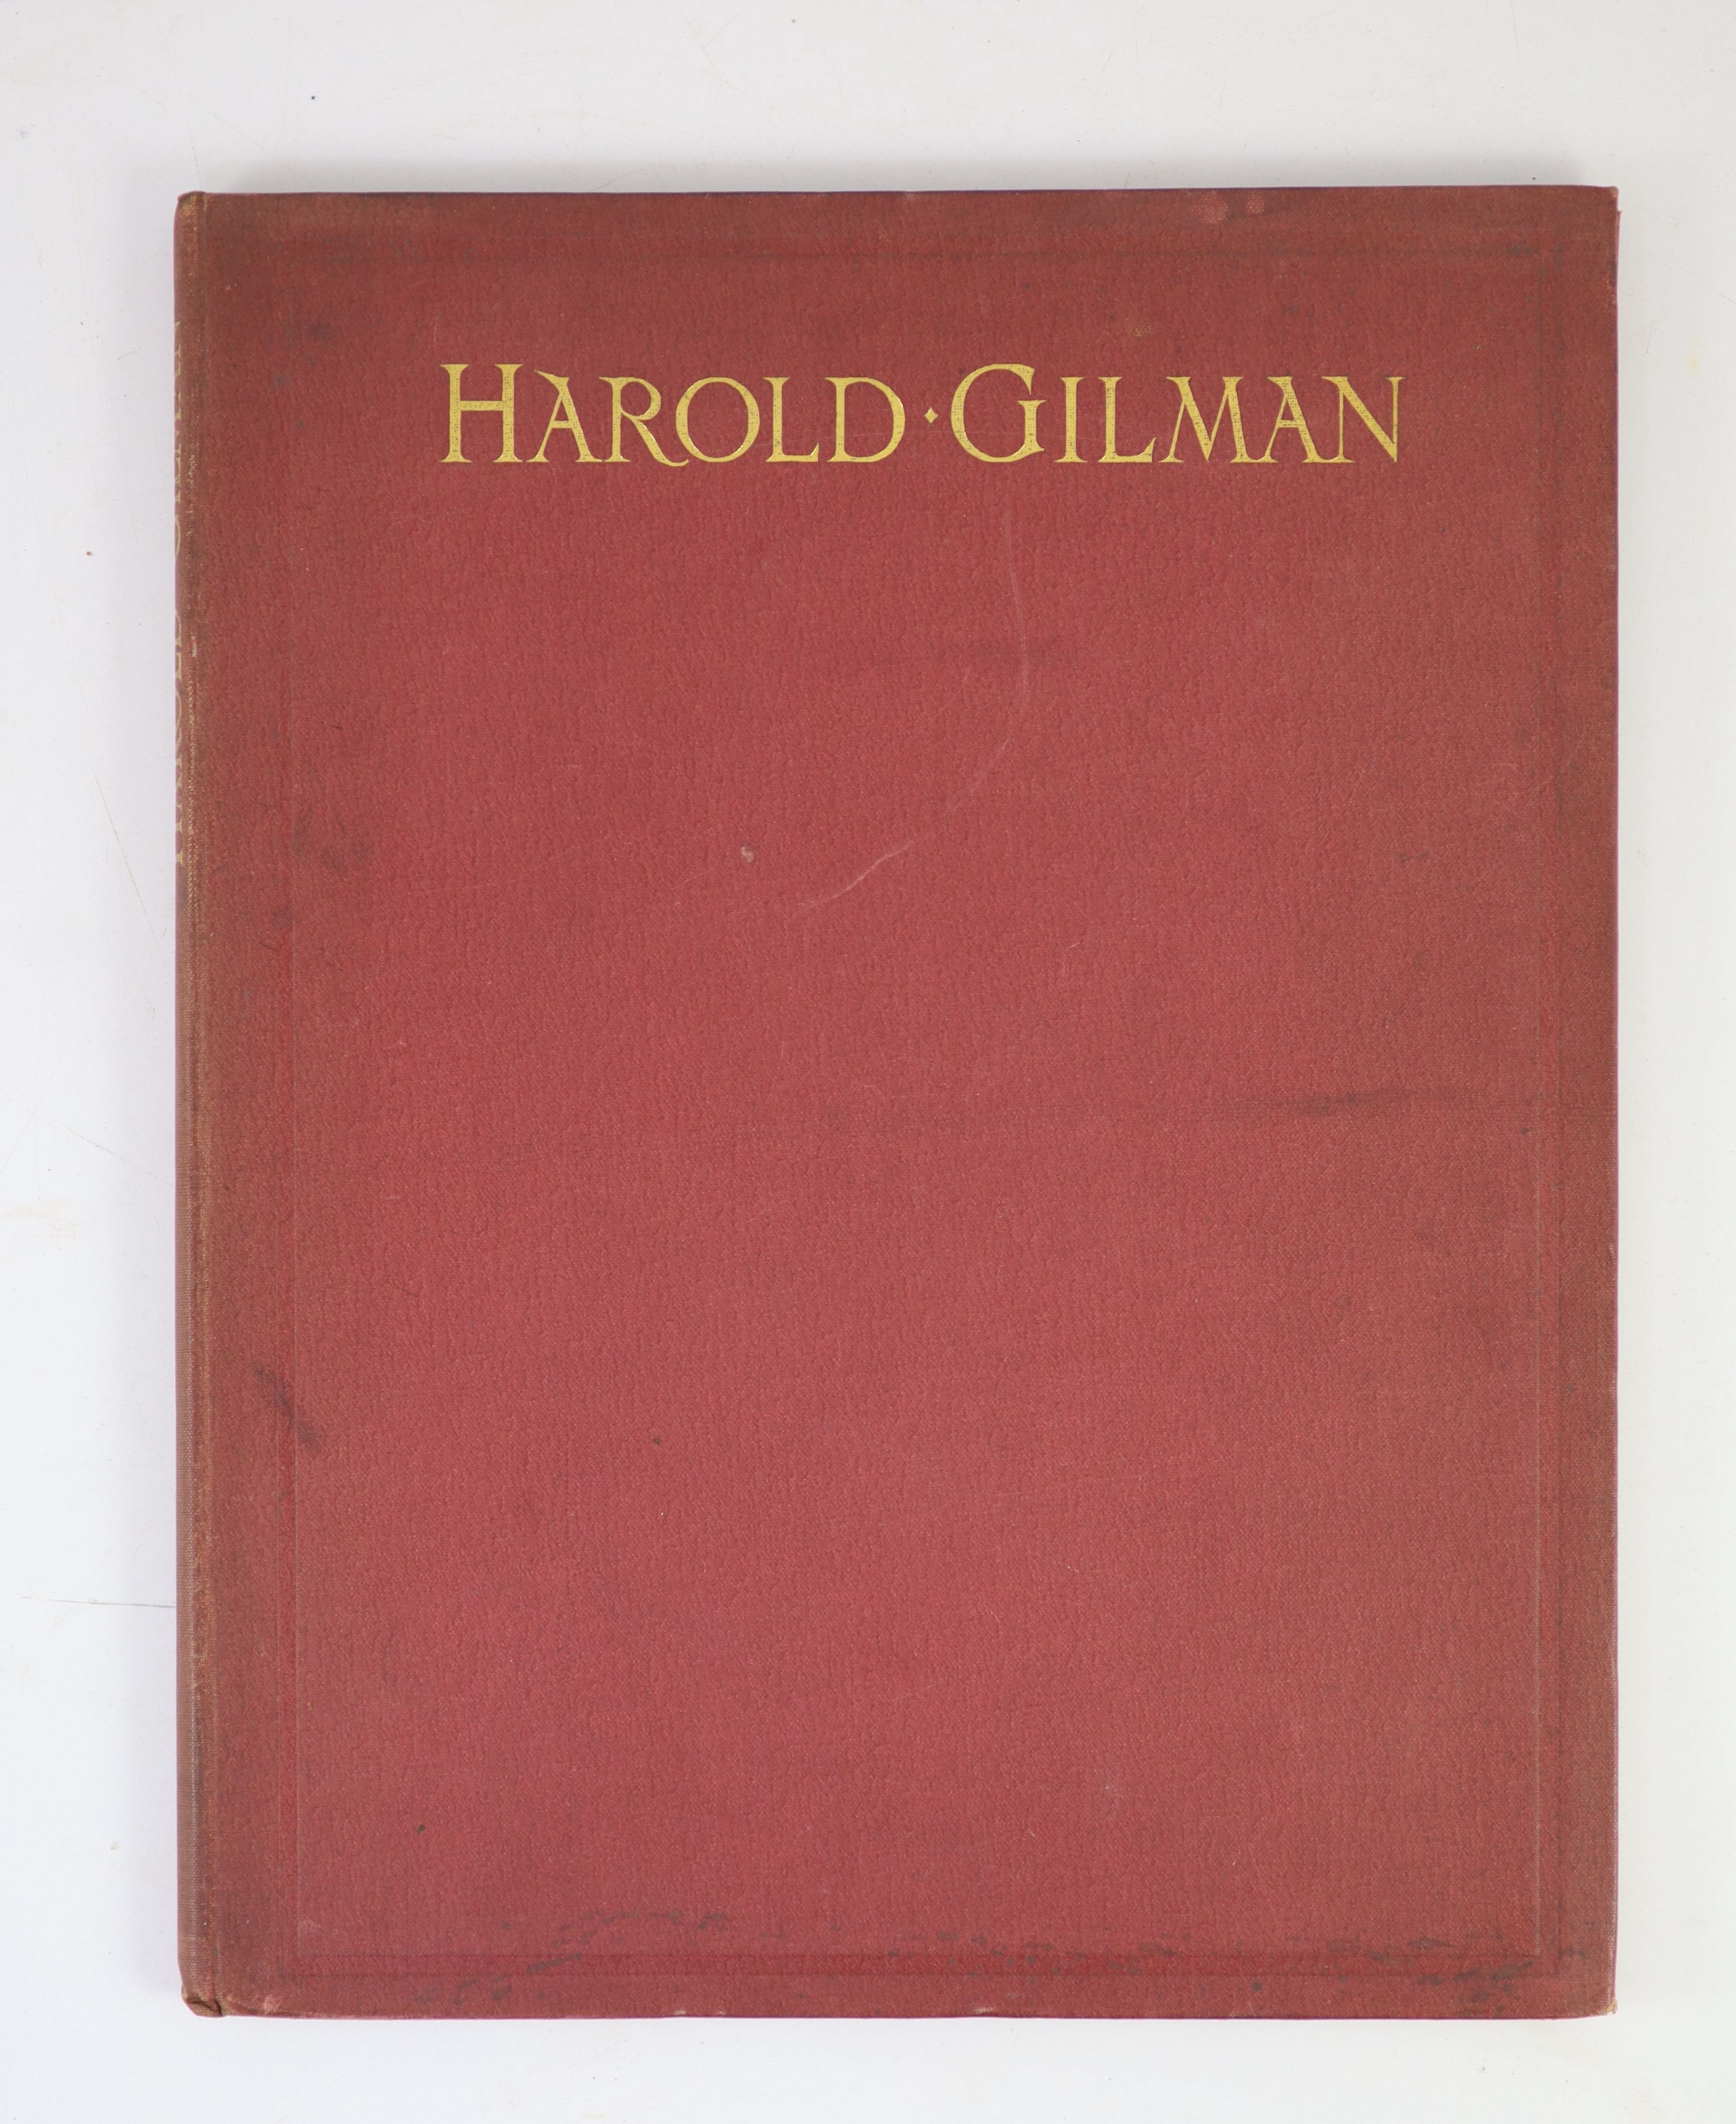 ° Lewis, Wyndham and Furgusson, Louis F - Harold Gilman - An Appreciation, 4to, original cloth, - Image 2 of 3